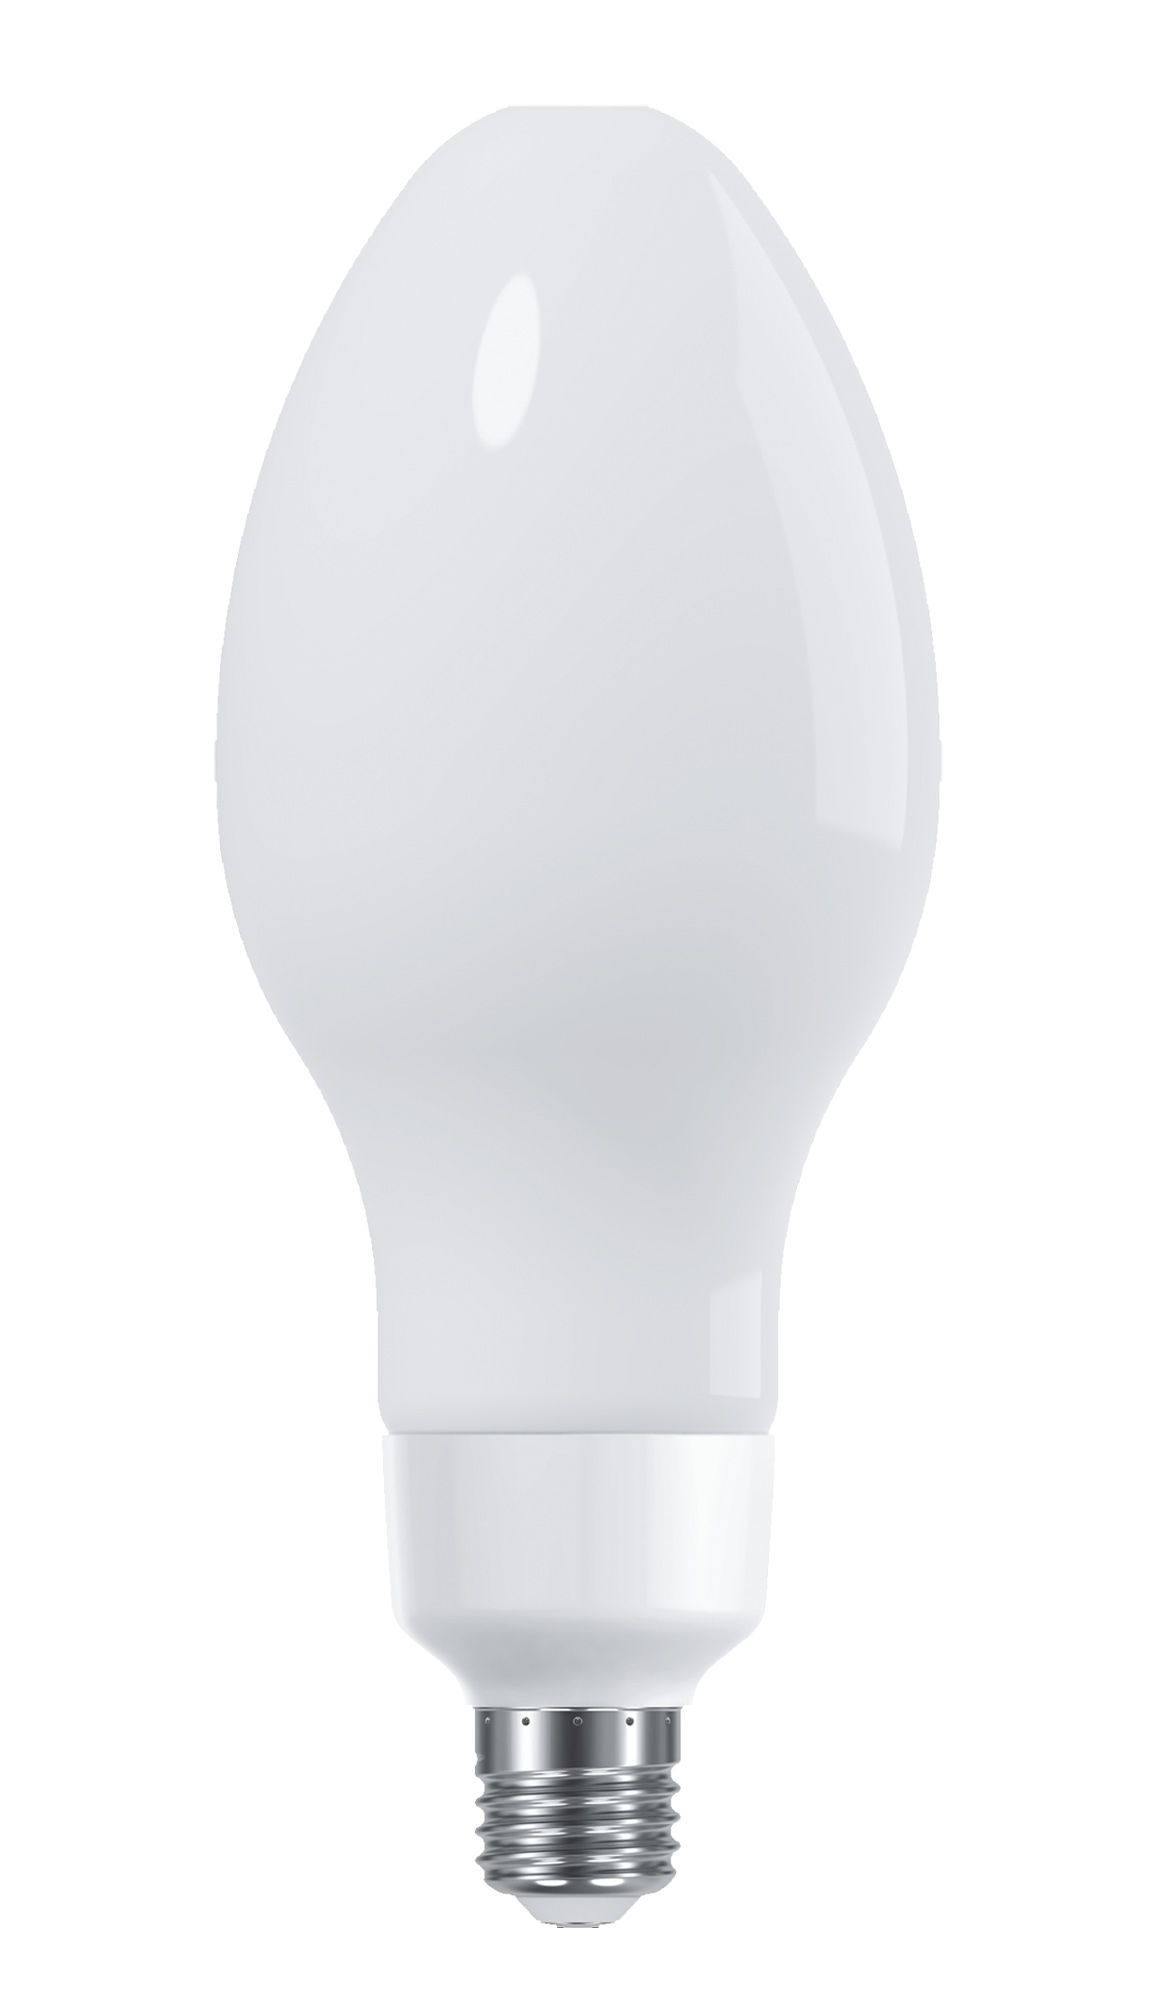 SLD E27 LED GLS Bulb 36 W(36W), 5000K, Daylight, Elliptical shape